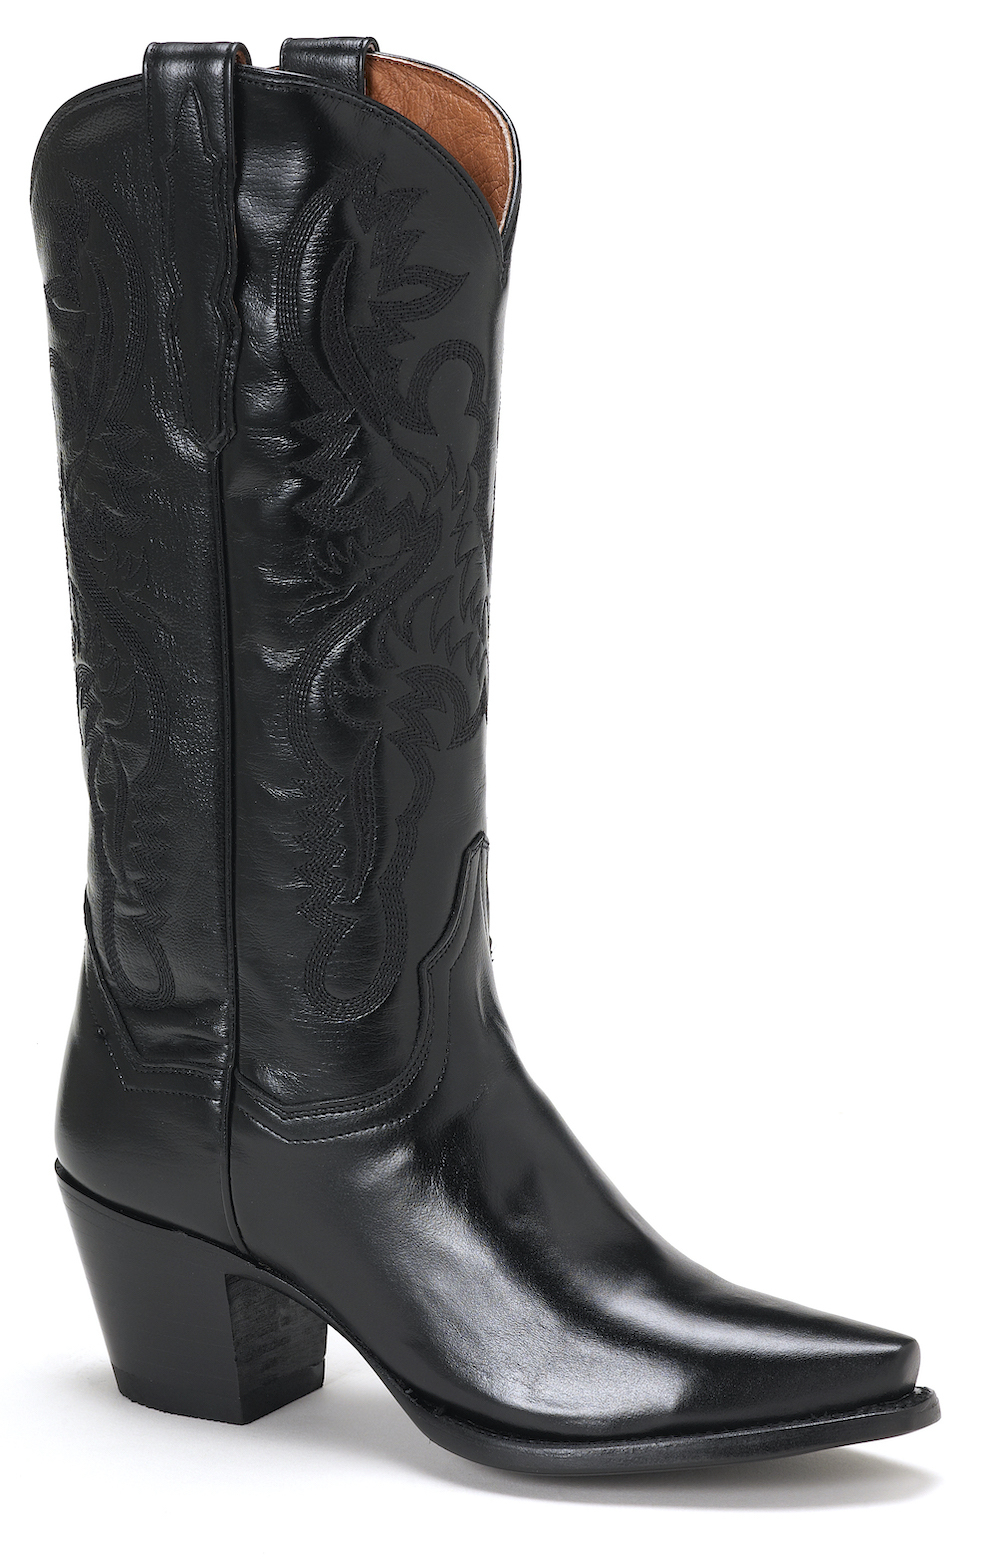 Booker Ultra Western Boot Size 7 - Ariat Men's Rambler Ultra Western ...